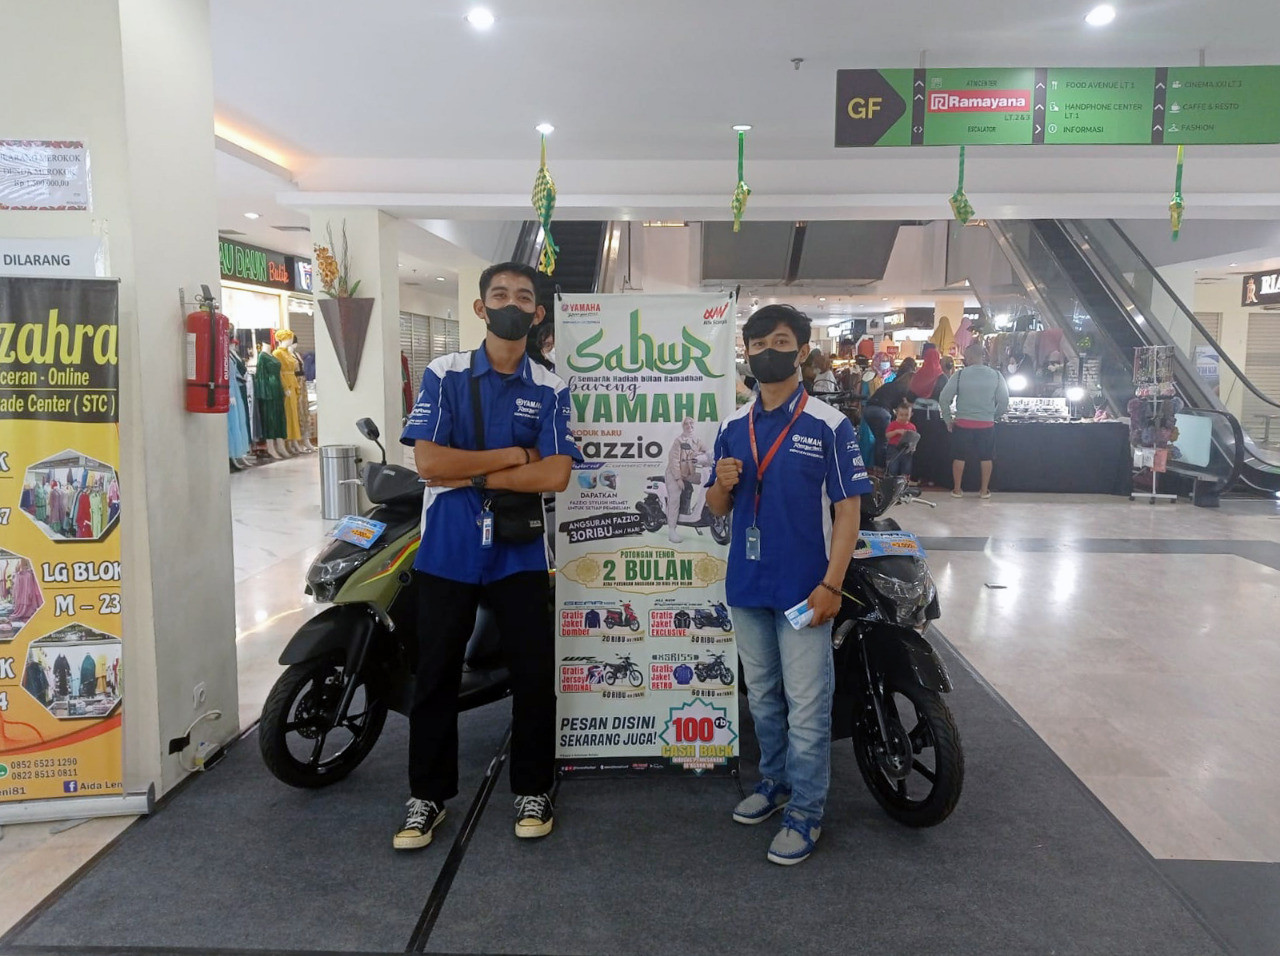 Pameran Motor Yamaha di Sudirman Trade Center, Nikmati Berbagai Promo Ramadhan